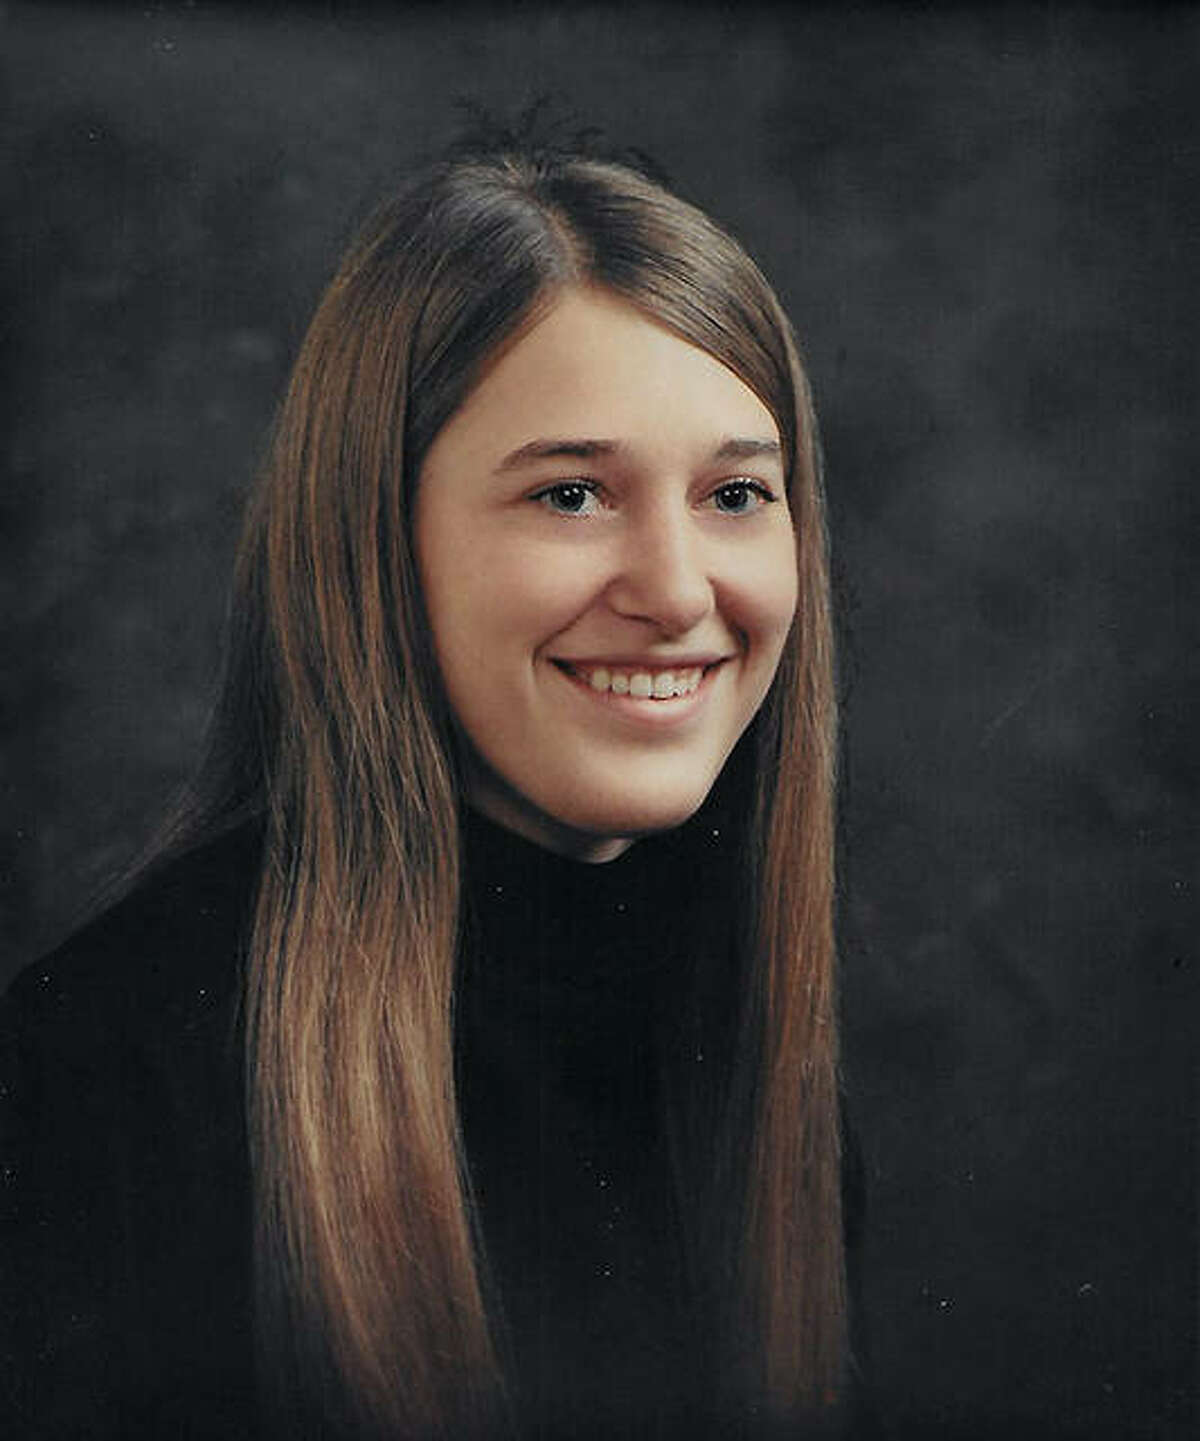 Karen Bardelmeier during her college days. Later known as Karen Albrecht, she has a new scholarship opportunity named for her.